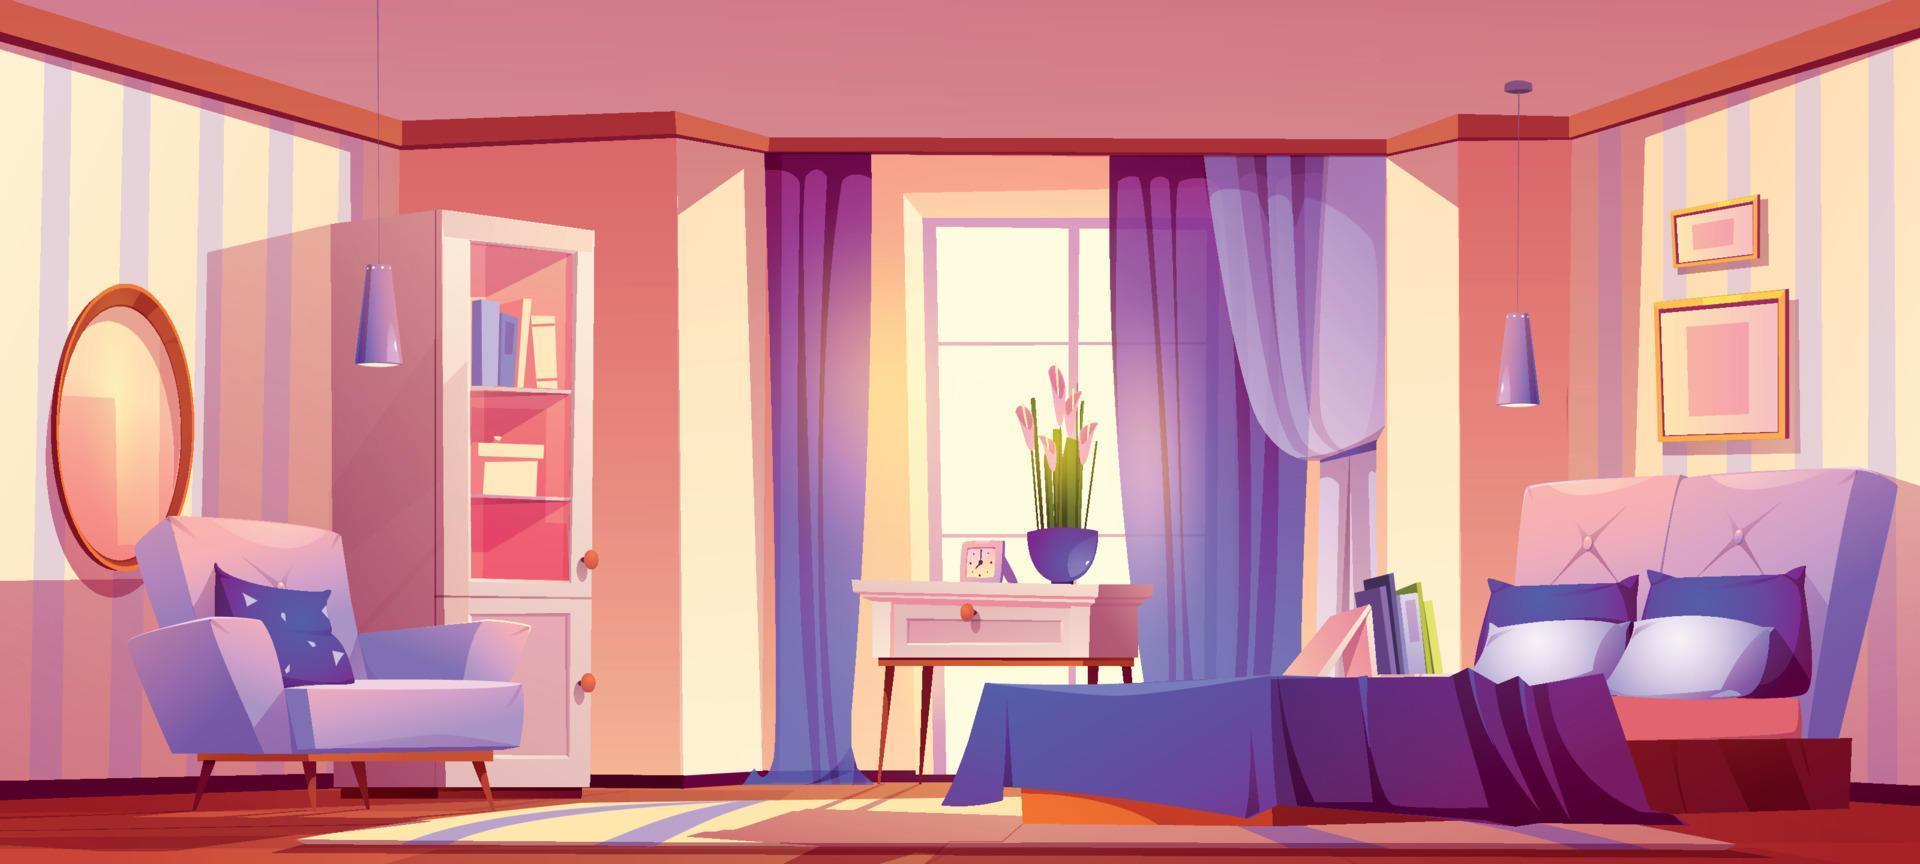 roze slaapkamer interieur met Purper decor leeg kamer vector